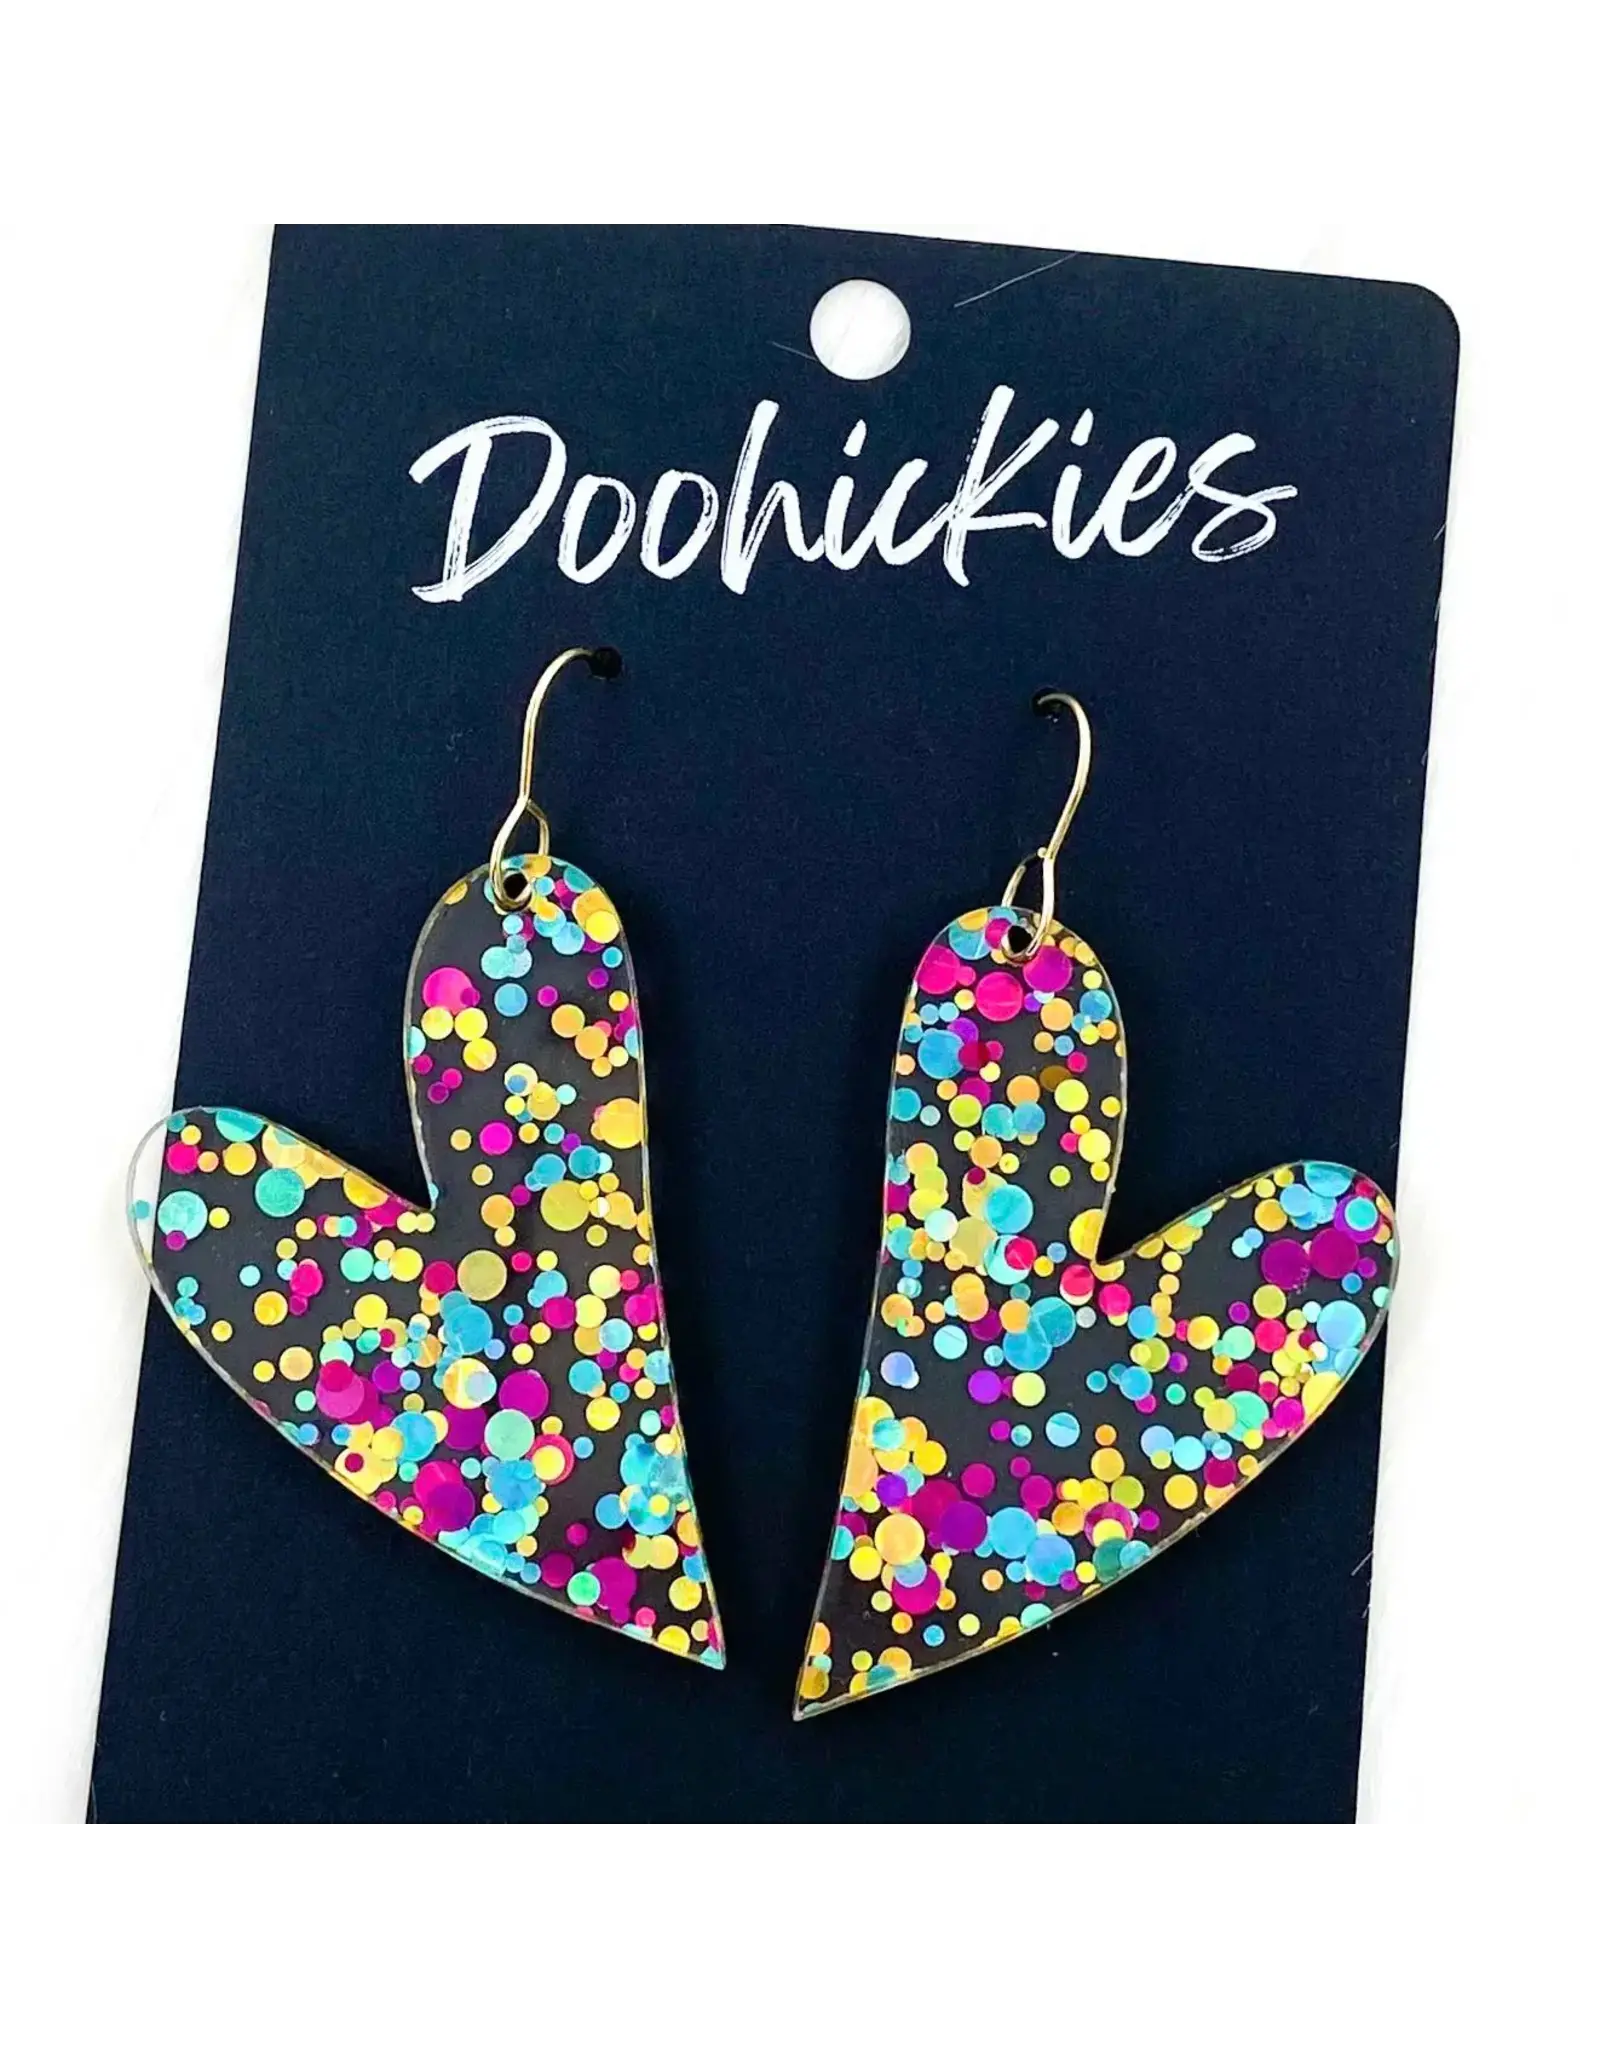 Doohickies/So. Charm Trade Valentine's Confetti Hear Earrings